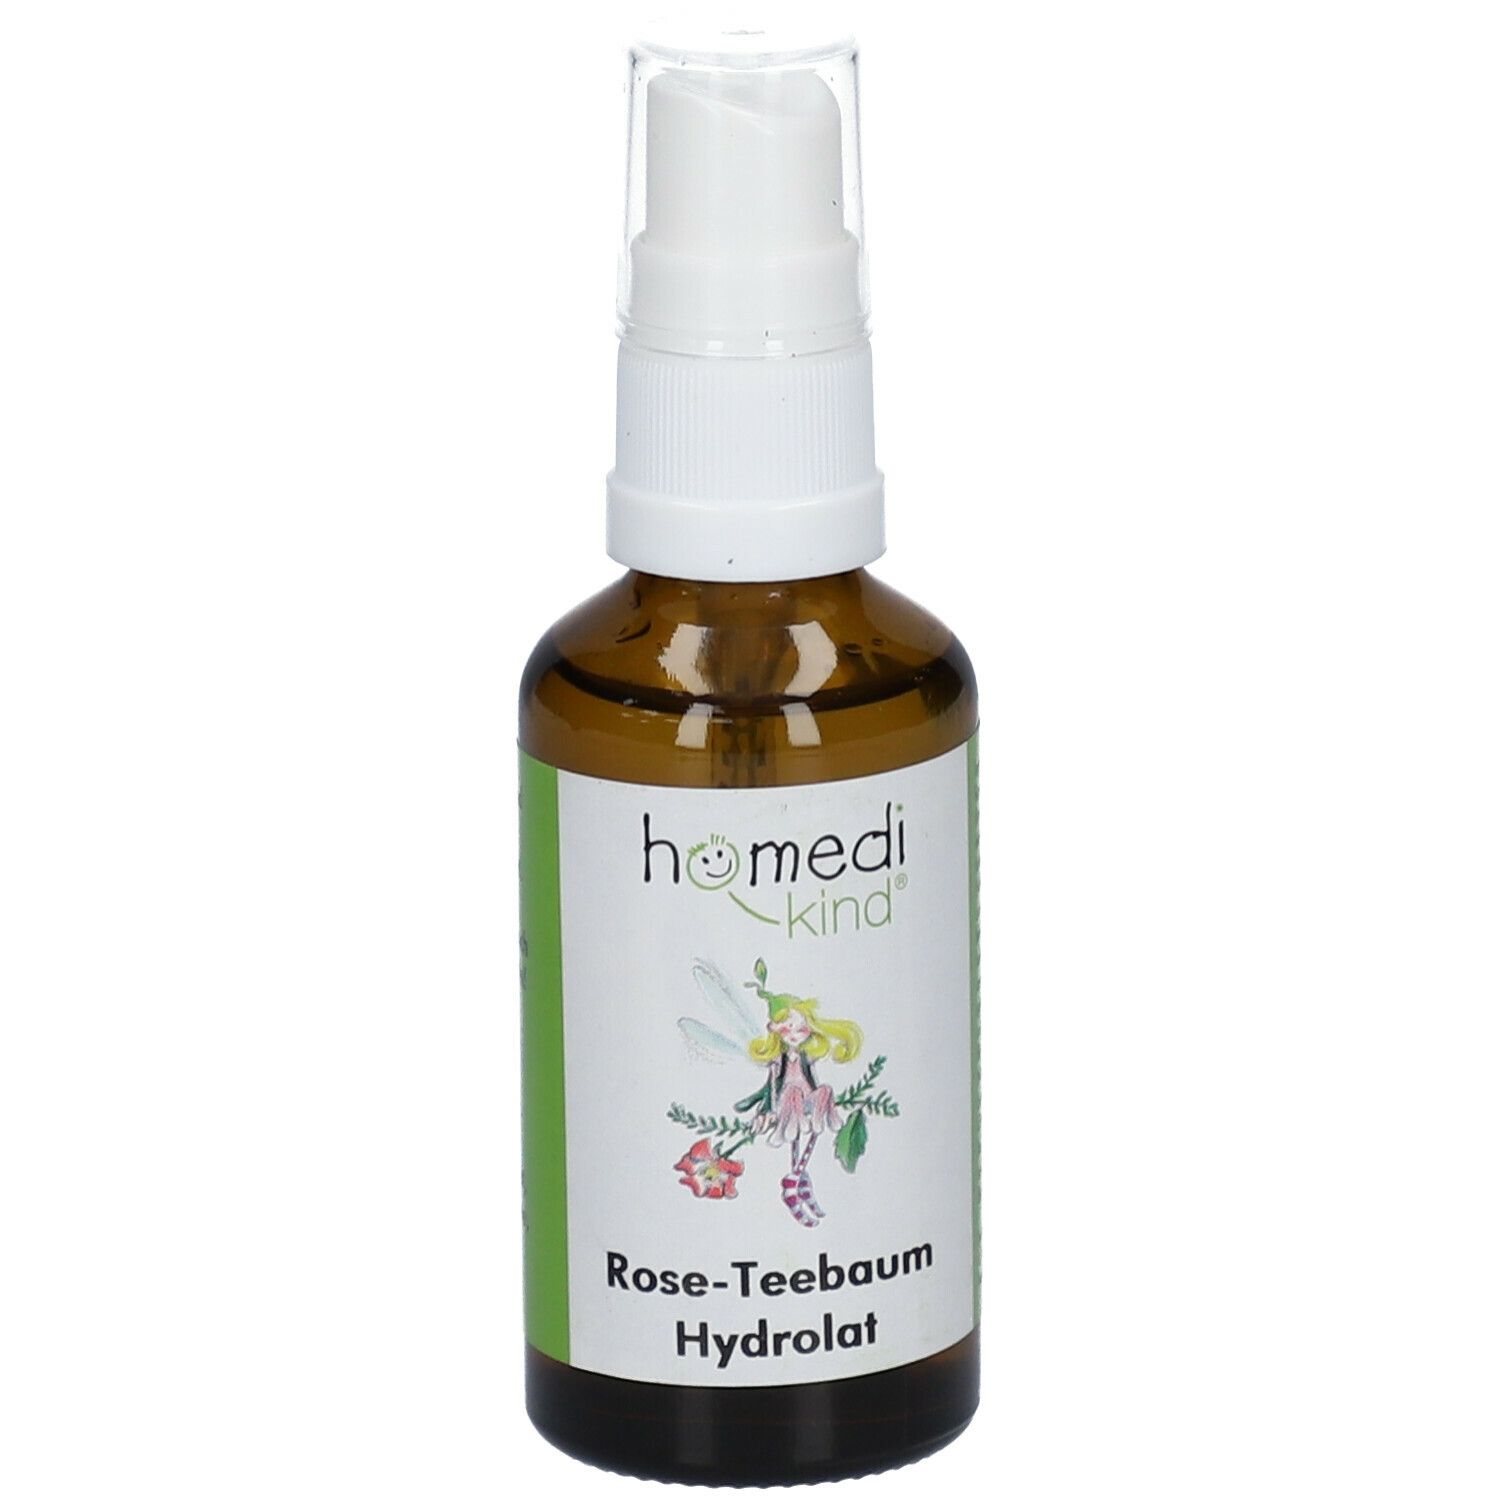 homedi-kind® Rose-Teebaum Hydrolat